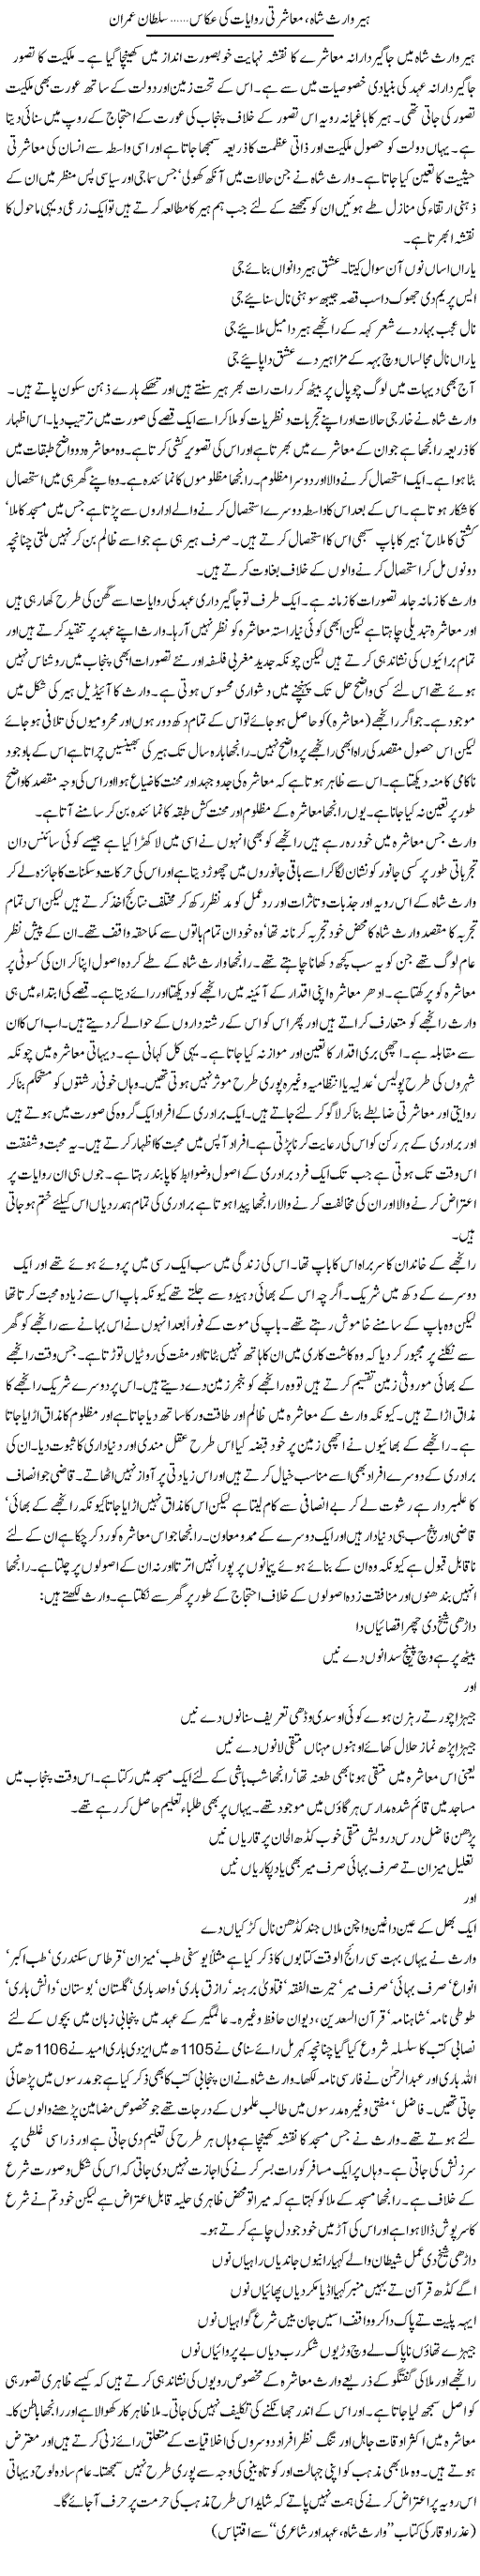 Heer Waris Shah;Muashrti Rwayat Ki Akaas | Sultan Imran | Daily Urdu Columns